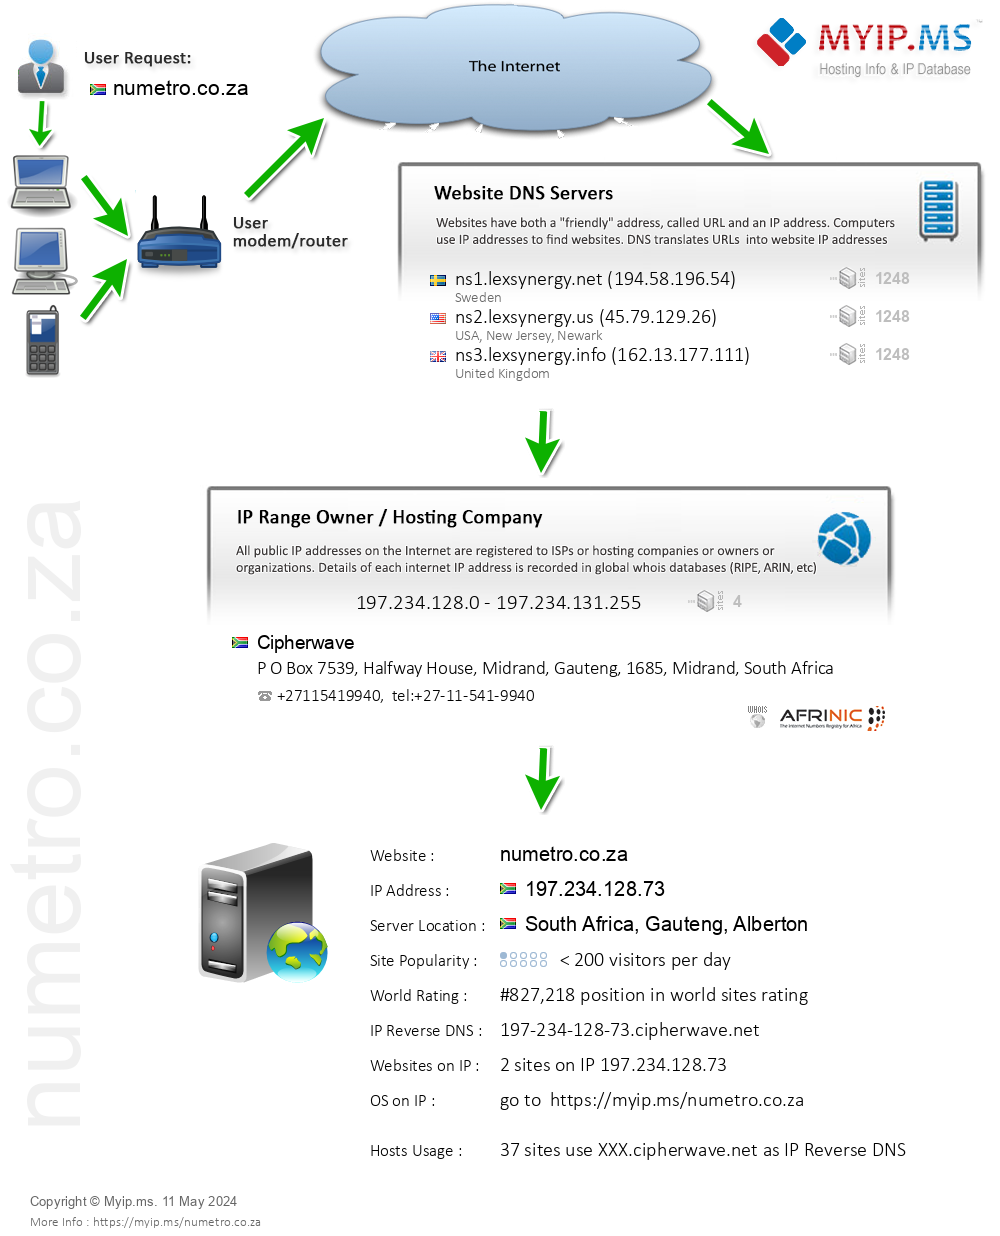 Numetro.co.za - Website Hosting Visual IP Diagram